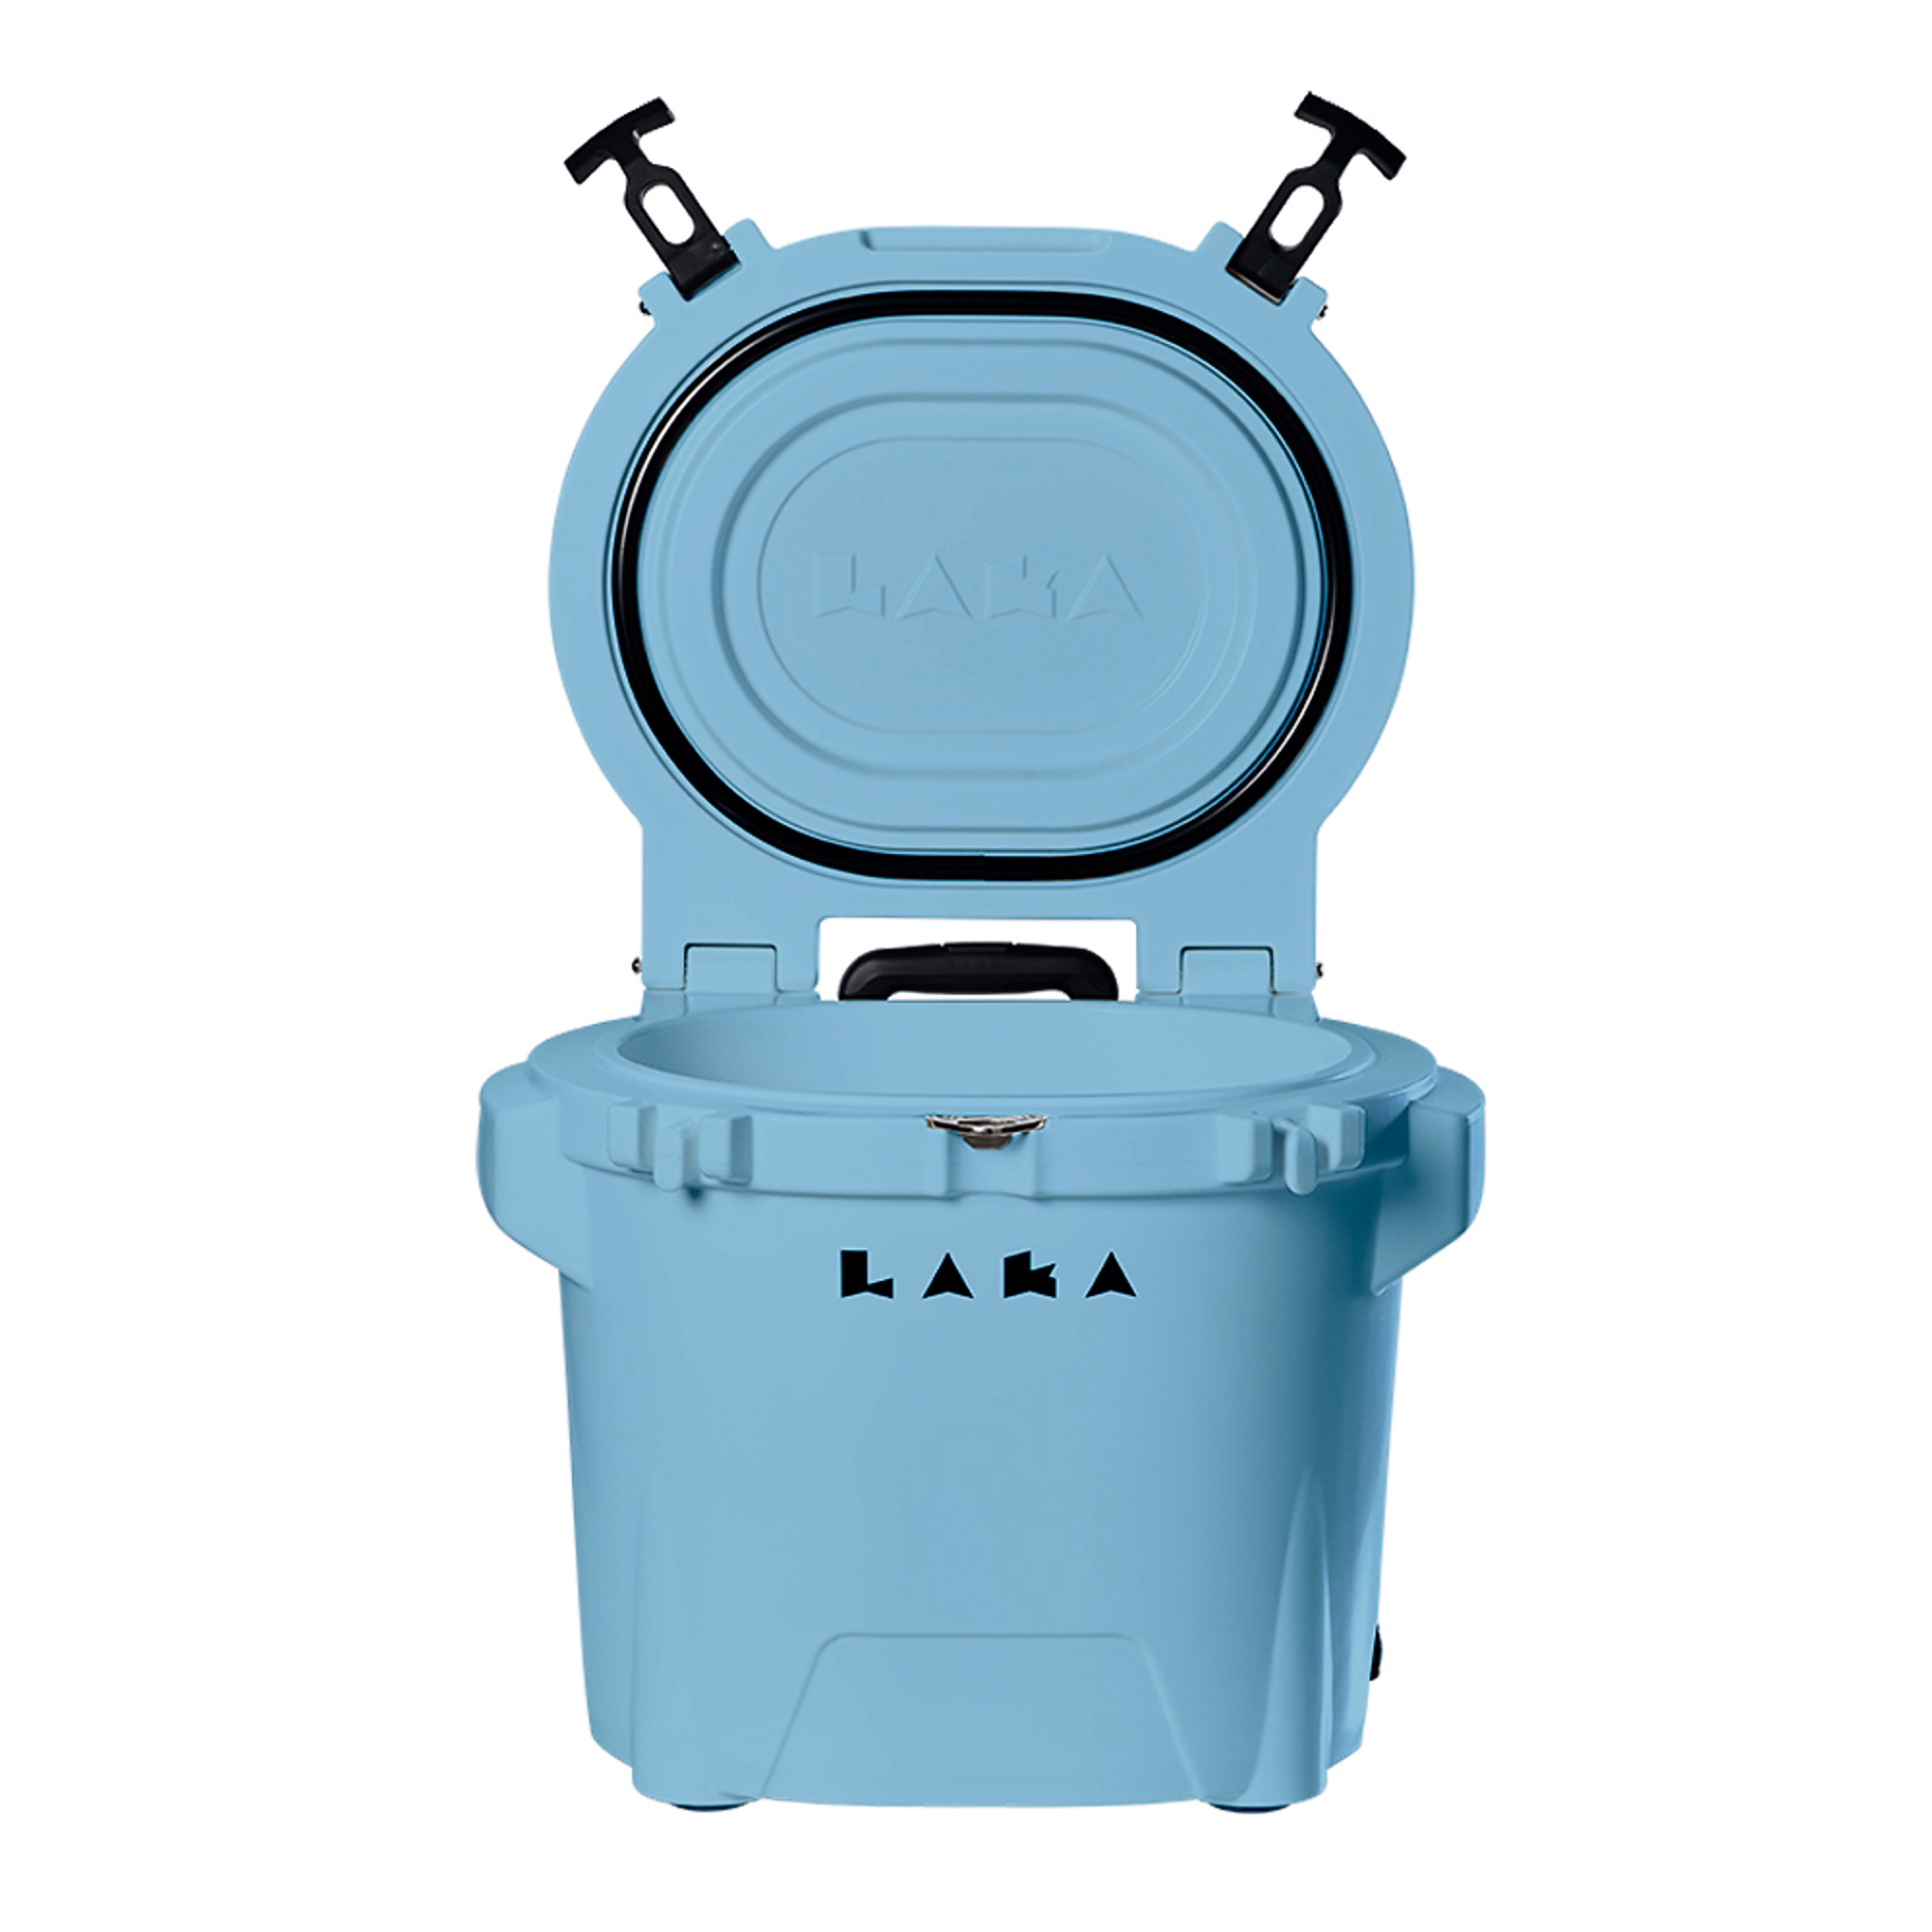 LAKA Cooler, Telescoping Handle, Rubber Wheels, Air-Tight, Capacity 7.5 Gal, Model 1080